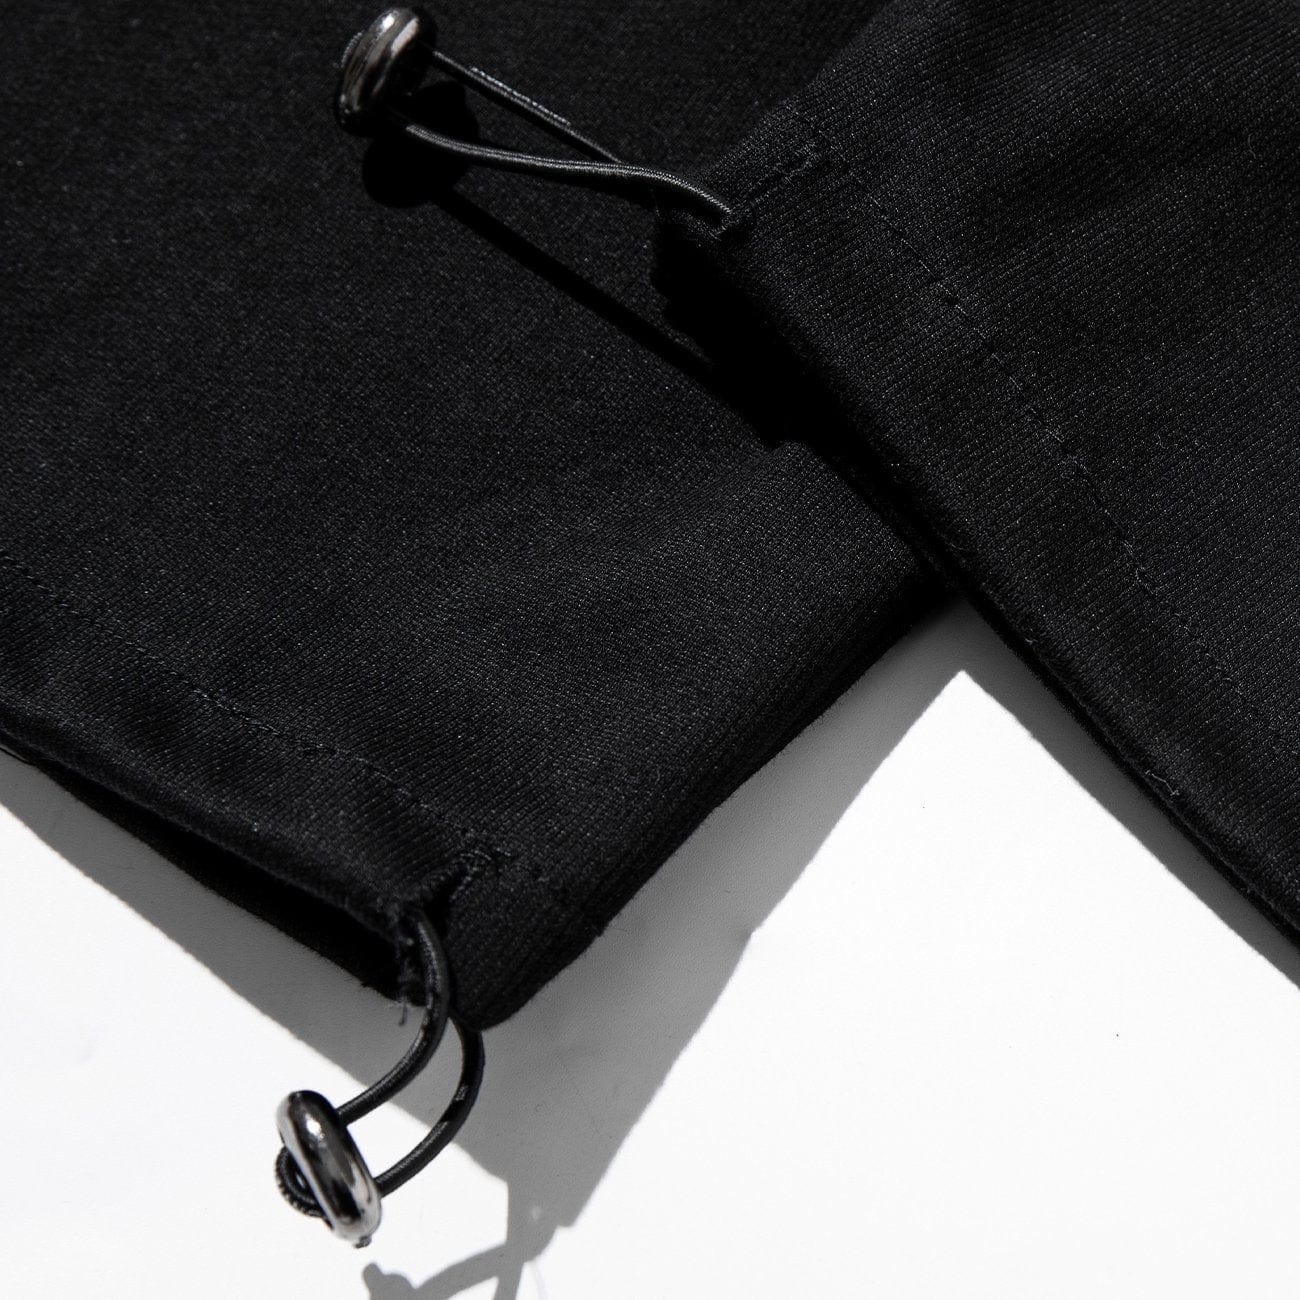 Zipper Pockets Drawstring Pants Streetwear Brand Techwear Combat Tactical YUGEN THEORY